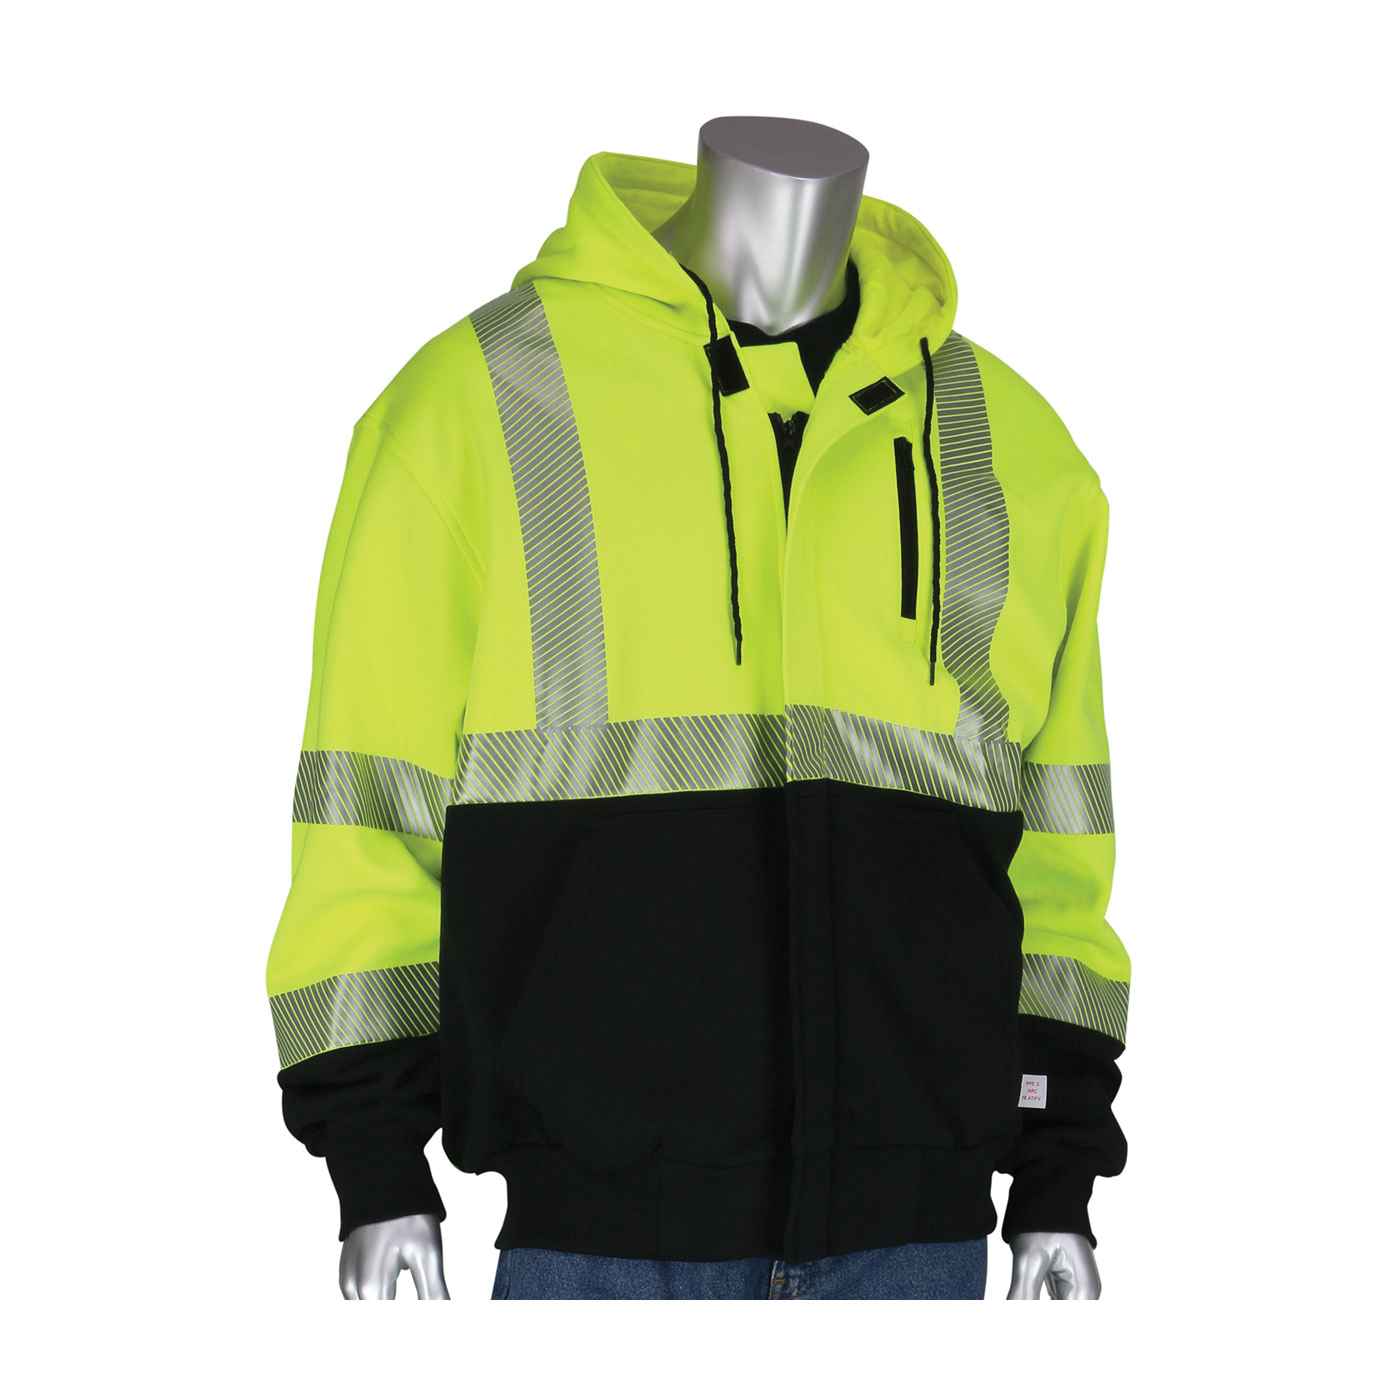 PIP® 385-1370FR-LY/2X 385-1370FR Arc and Flame Resistant Hooded Sweatshirt With Black Bottom, Unisex, 2XL, Hi-Viz Yellow/Black, 60% Modacrylic/40% Cotton, 31 in L